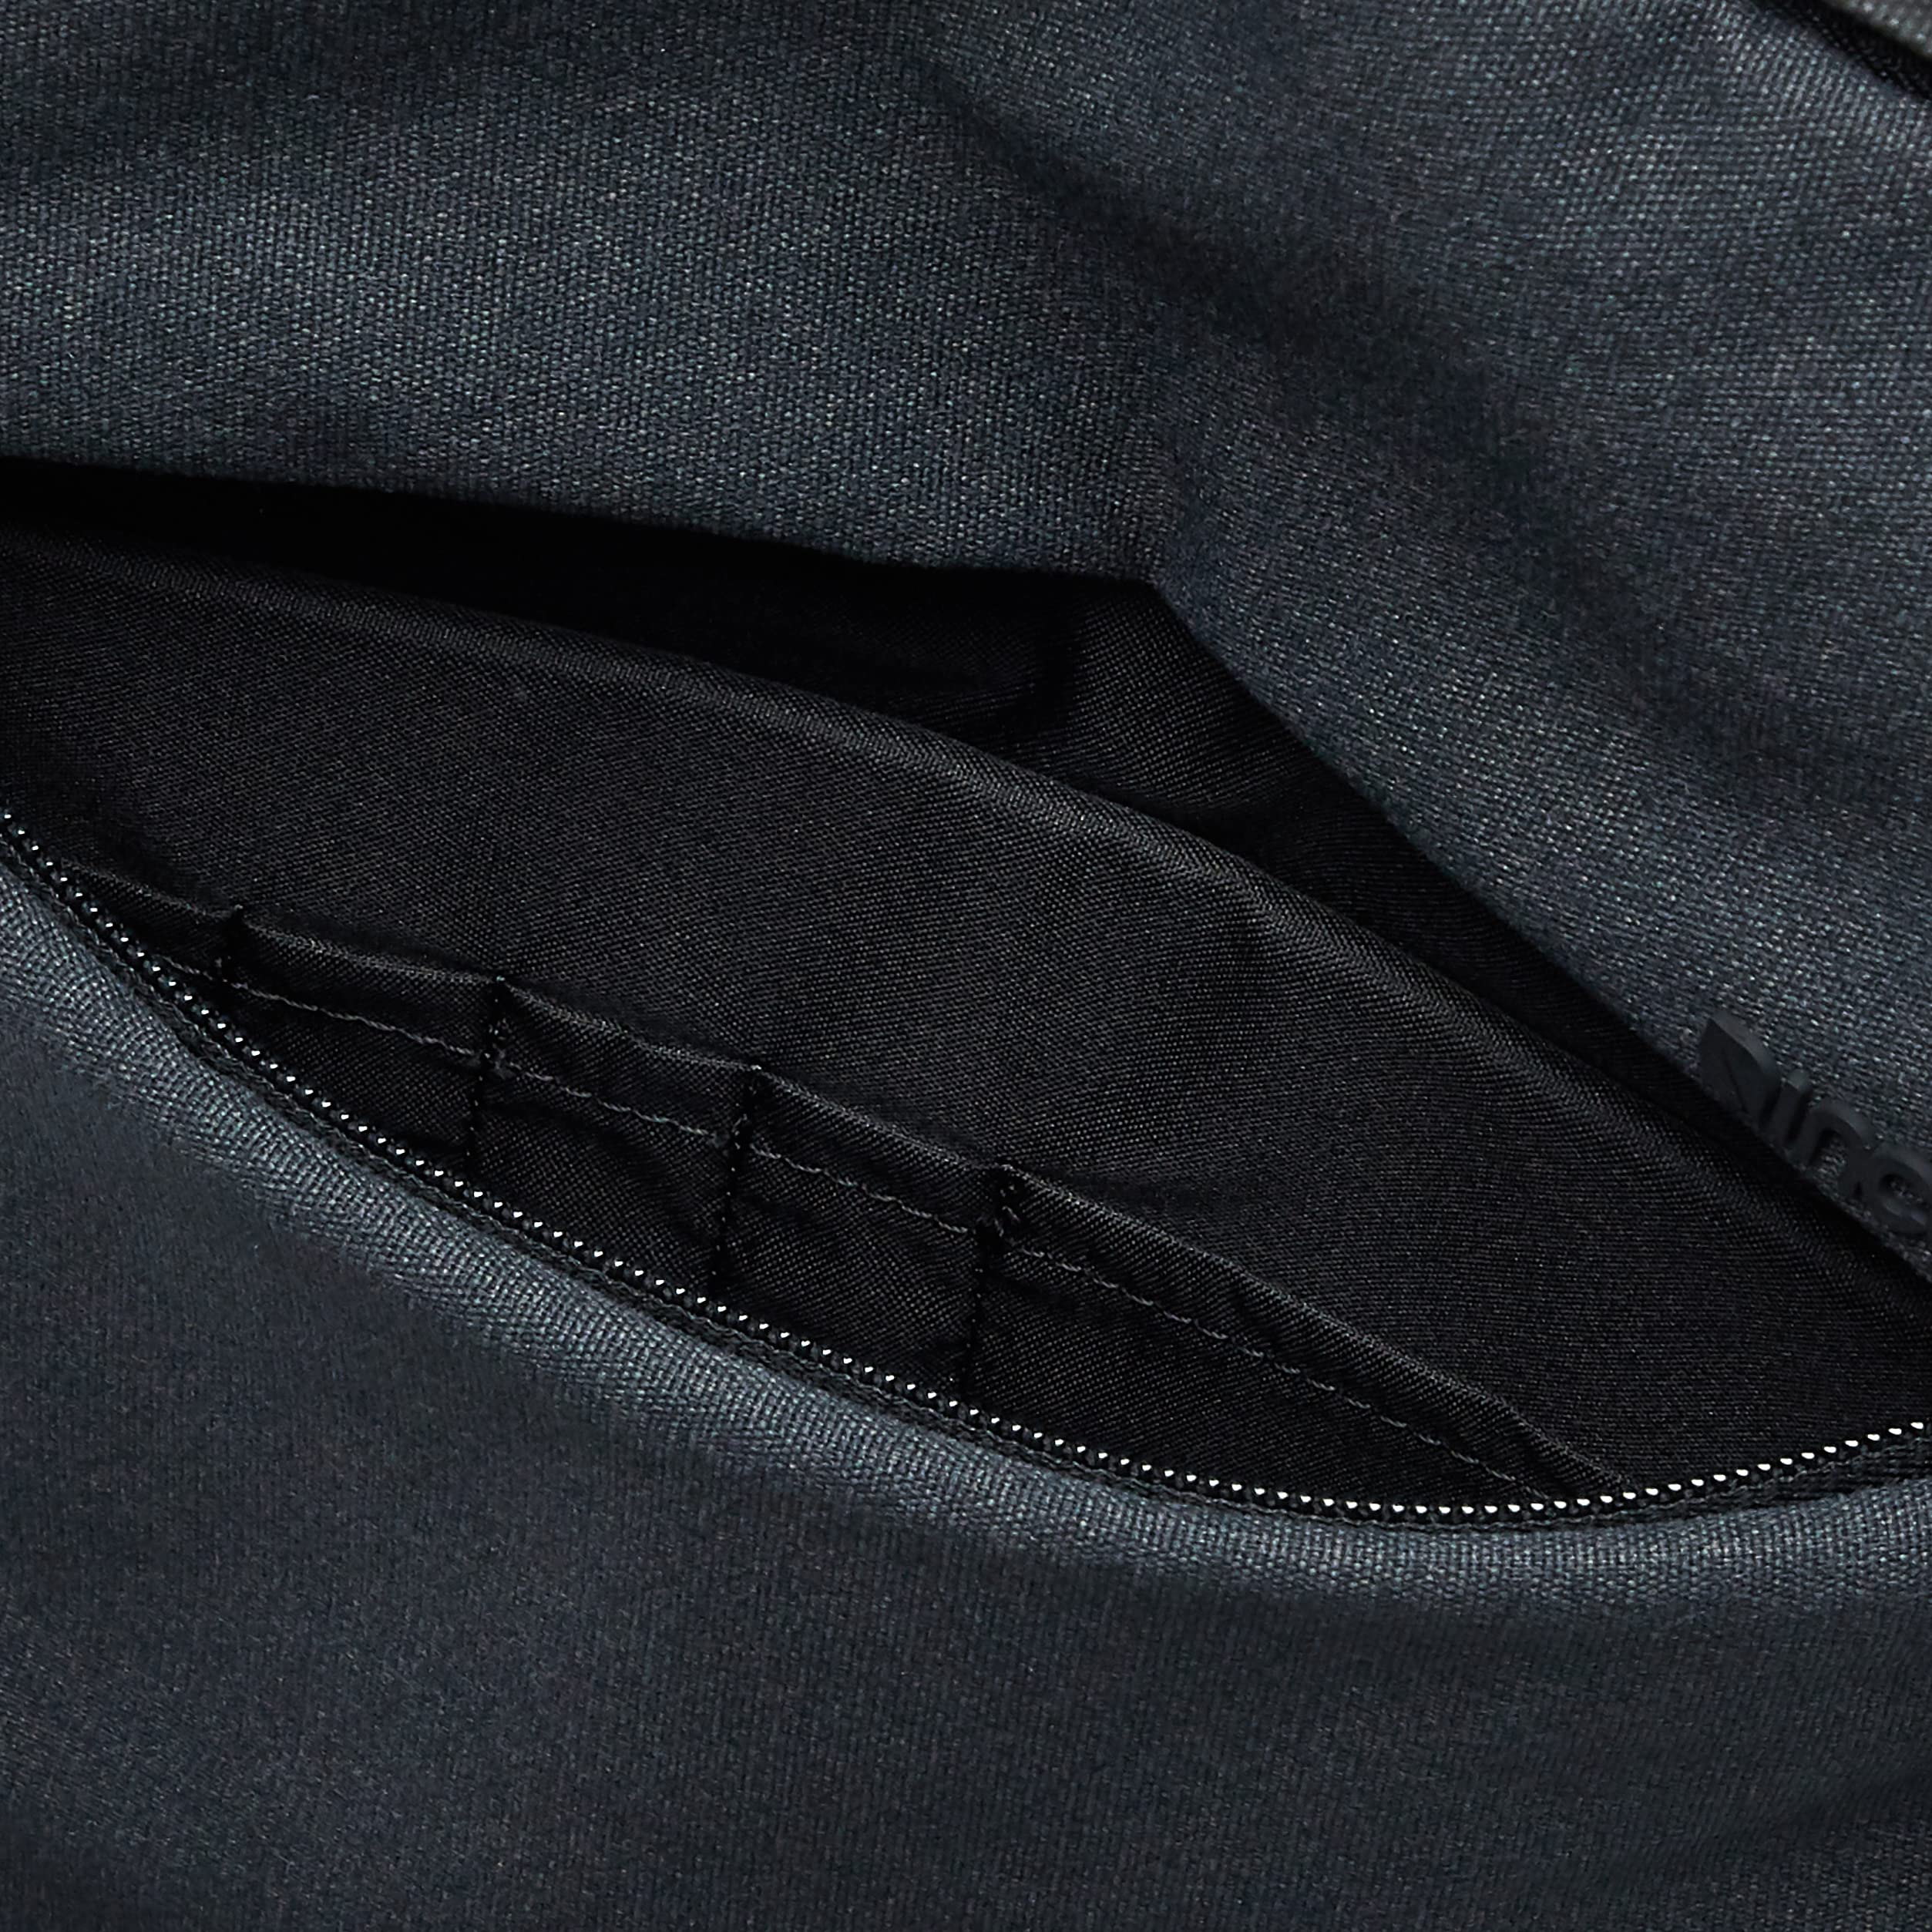 [Incase] 37191017 City Dot Backpack, 13 inch, Black